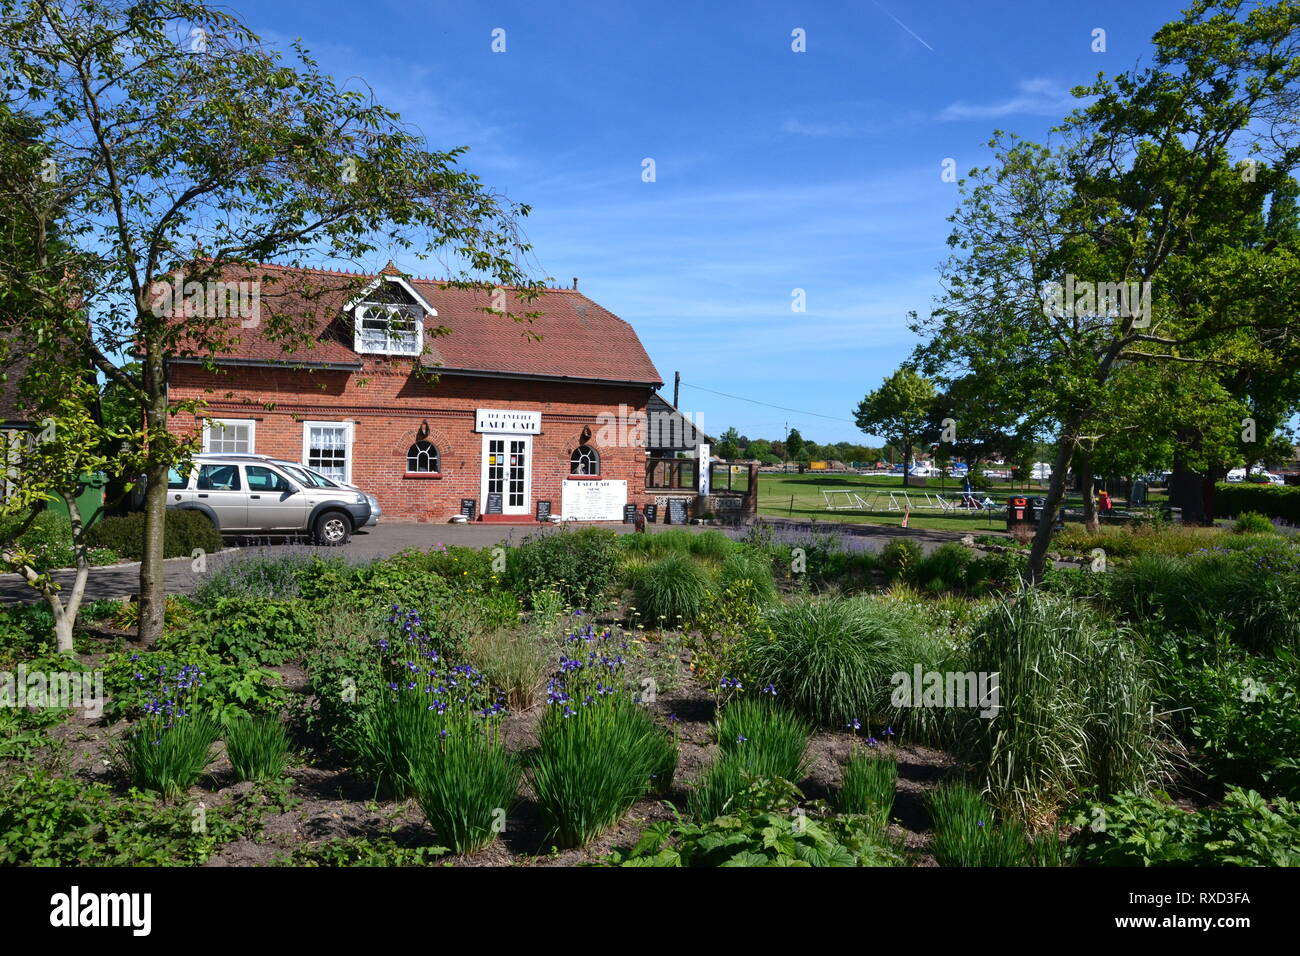 Everitt Park Cafe at Oulton Broad, Suffolk, UK Stock Photo